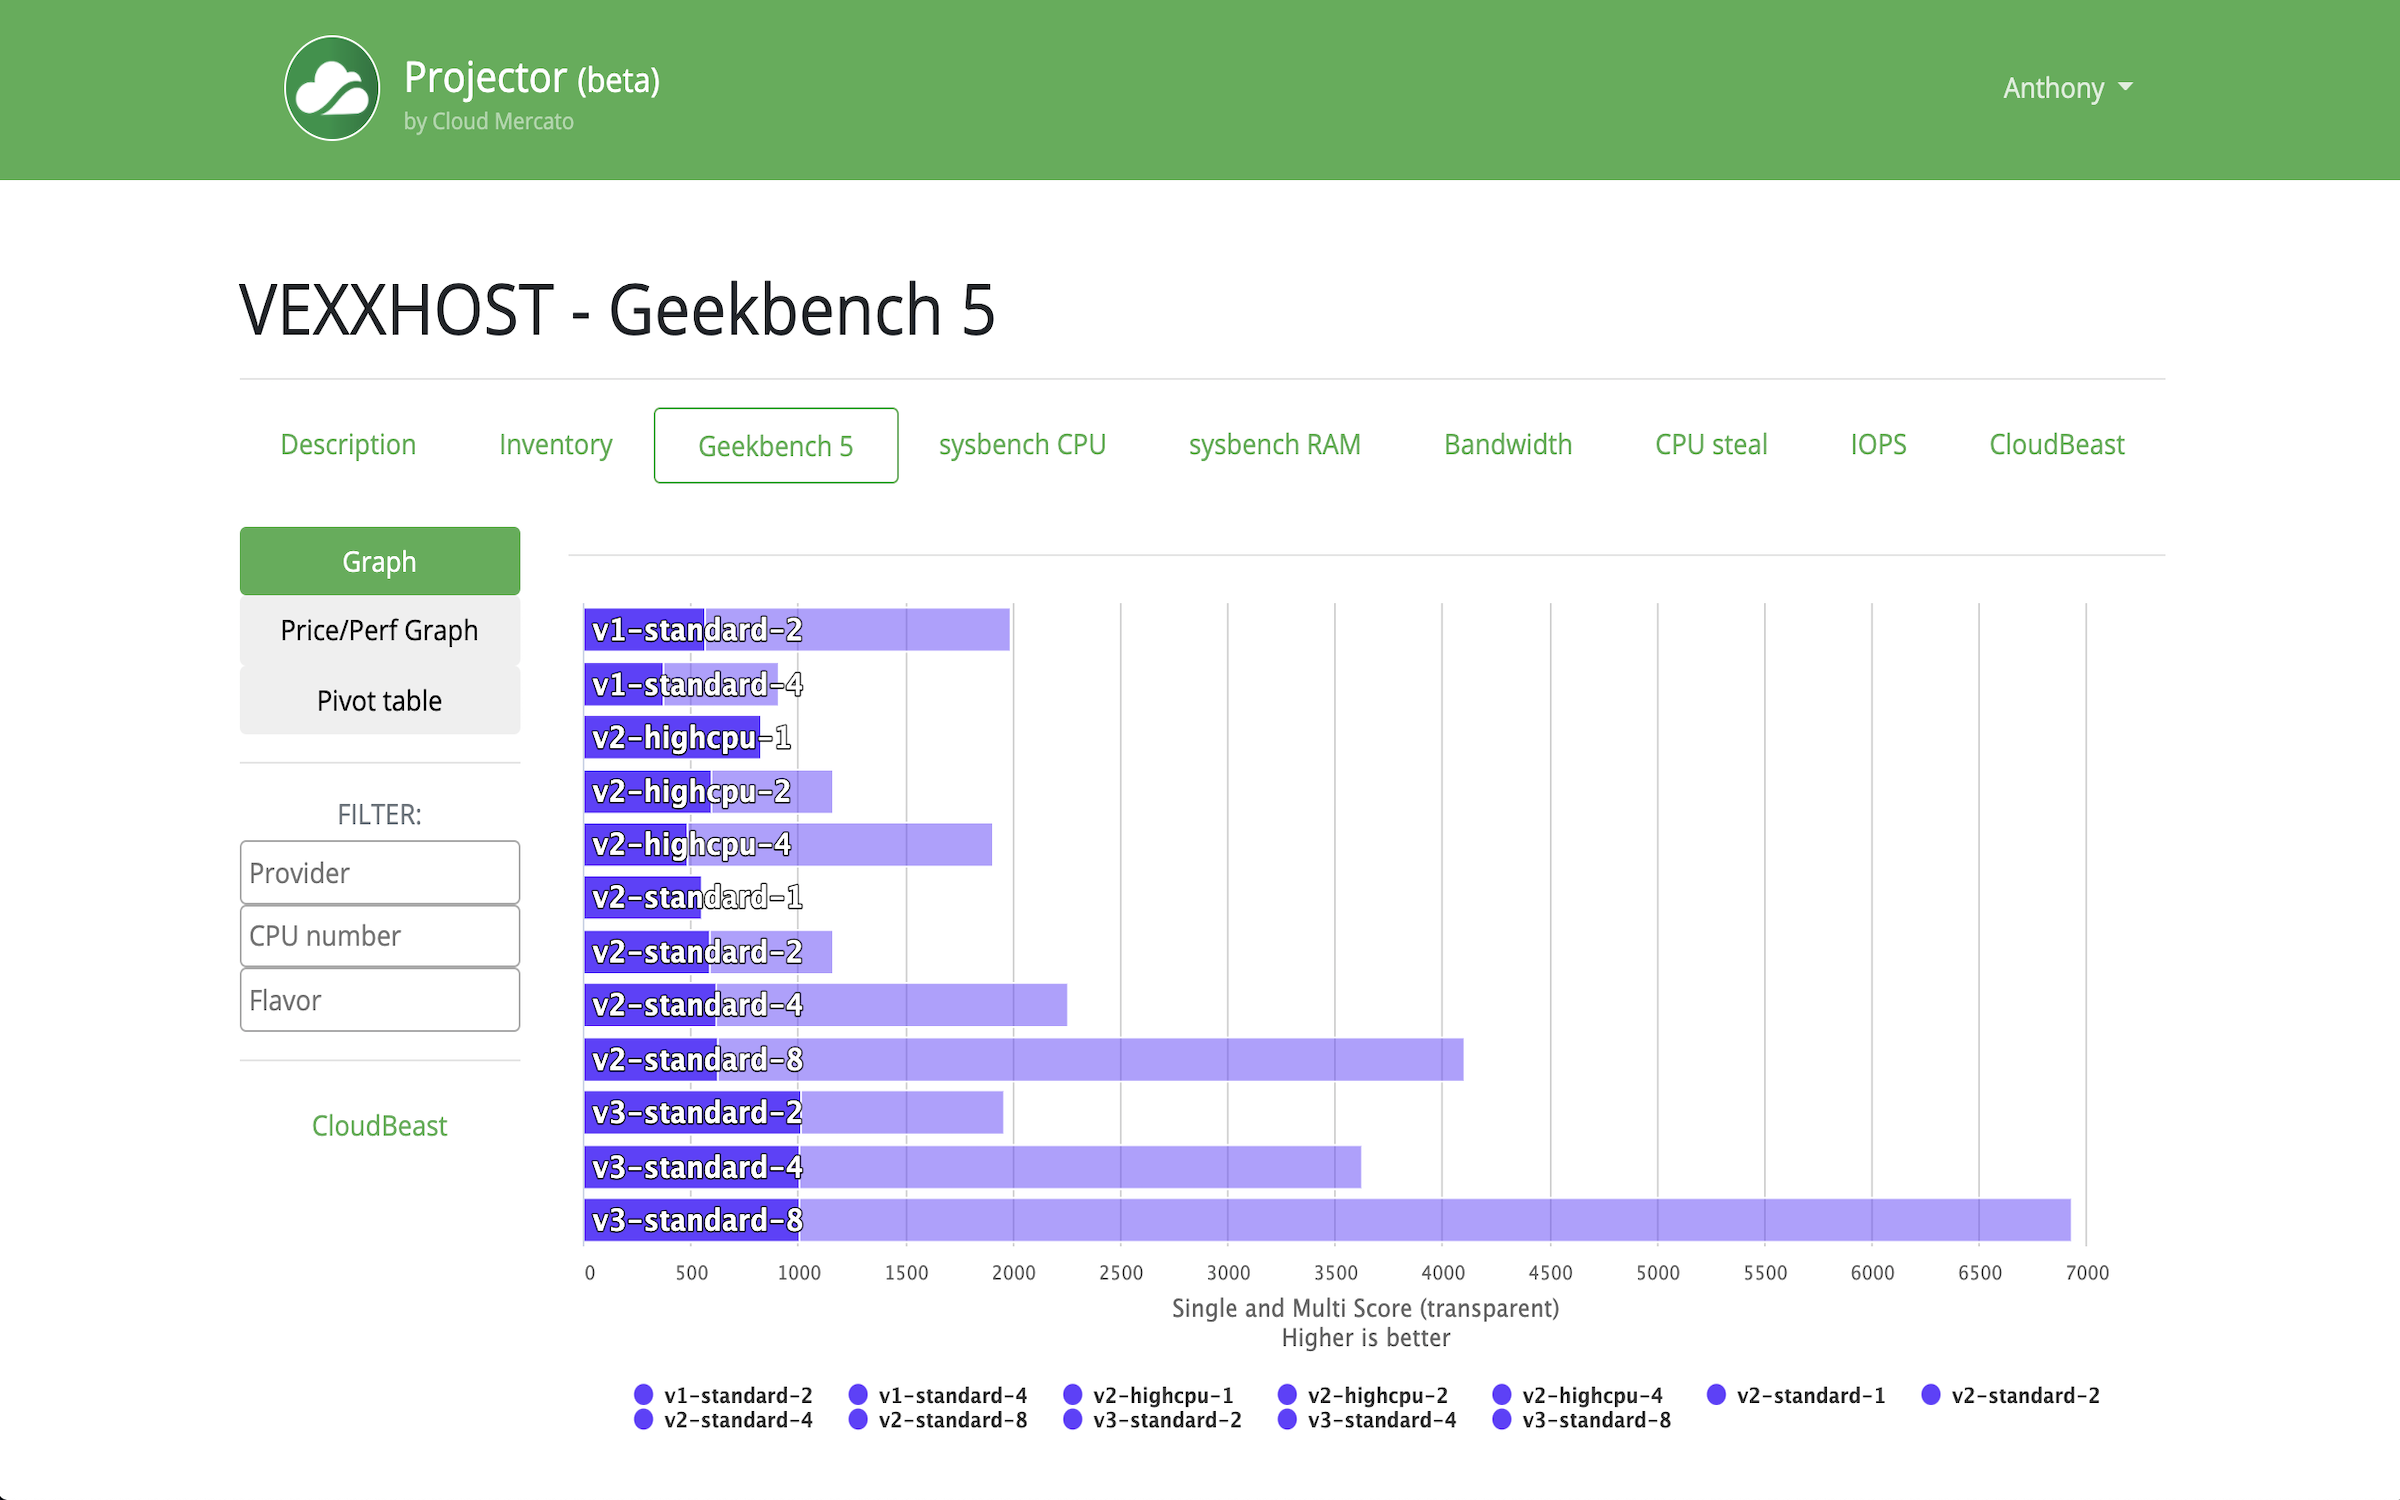 VEXXHOST's Geekbench performance in Projector